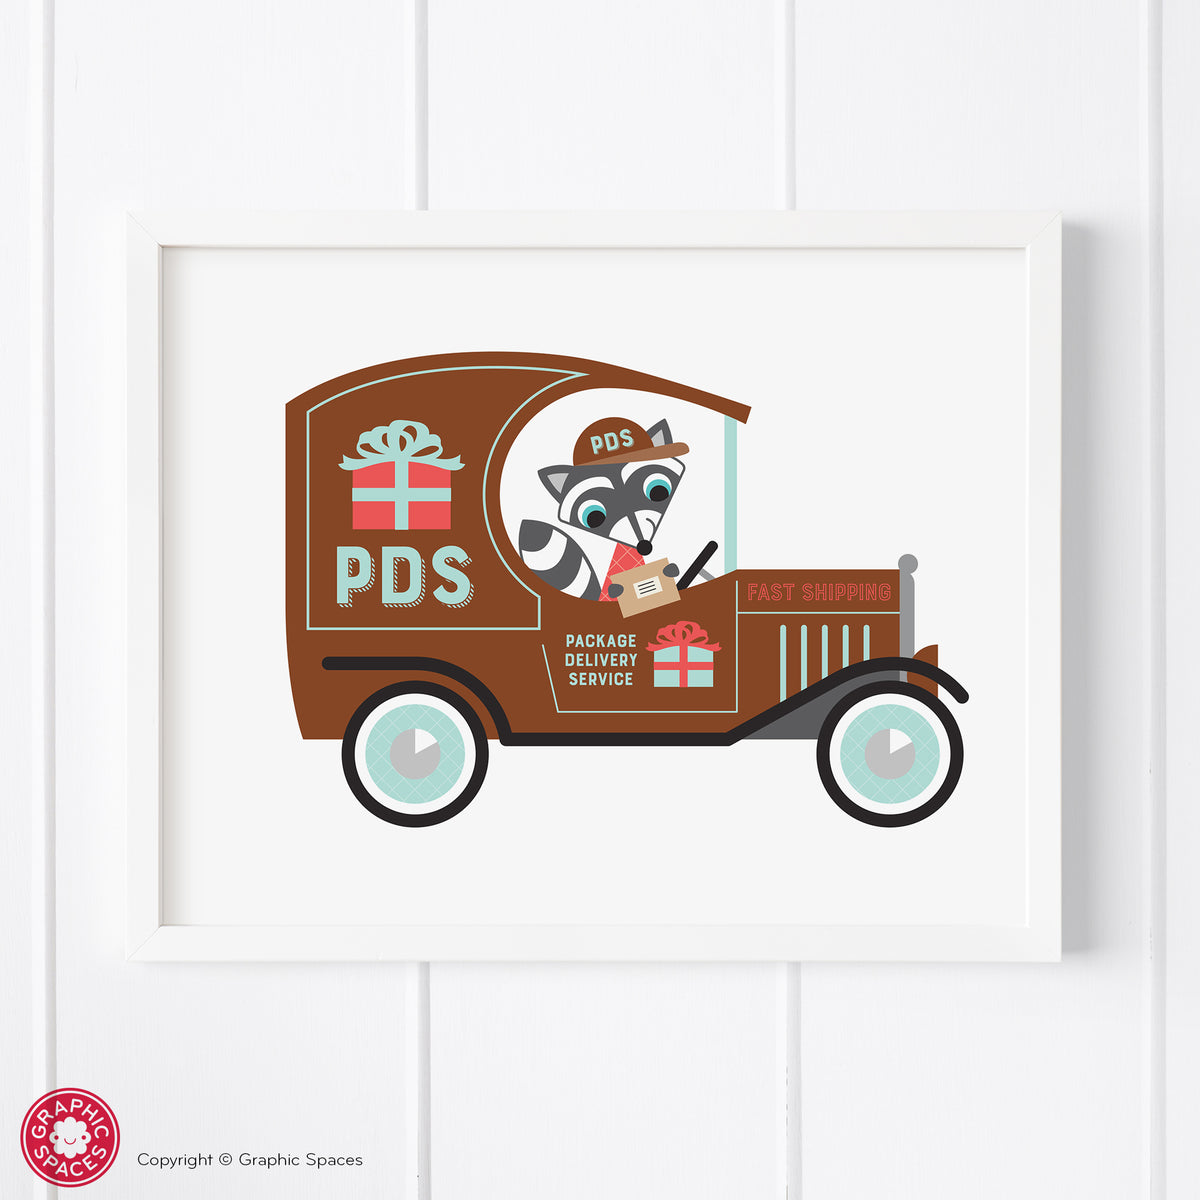 Animals in Trucks Art Prints - Set of 4